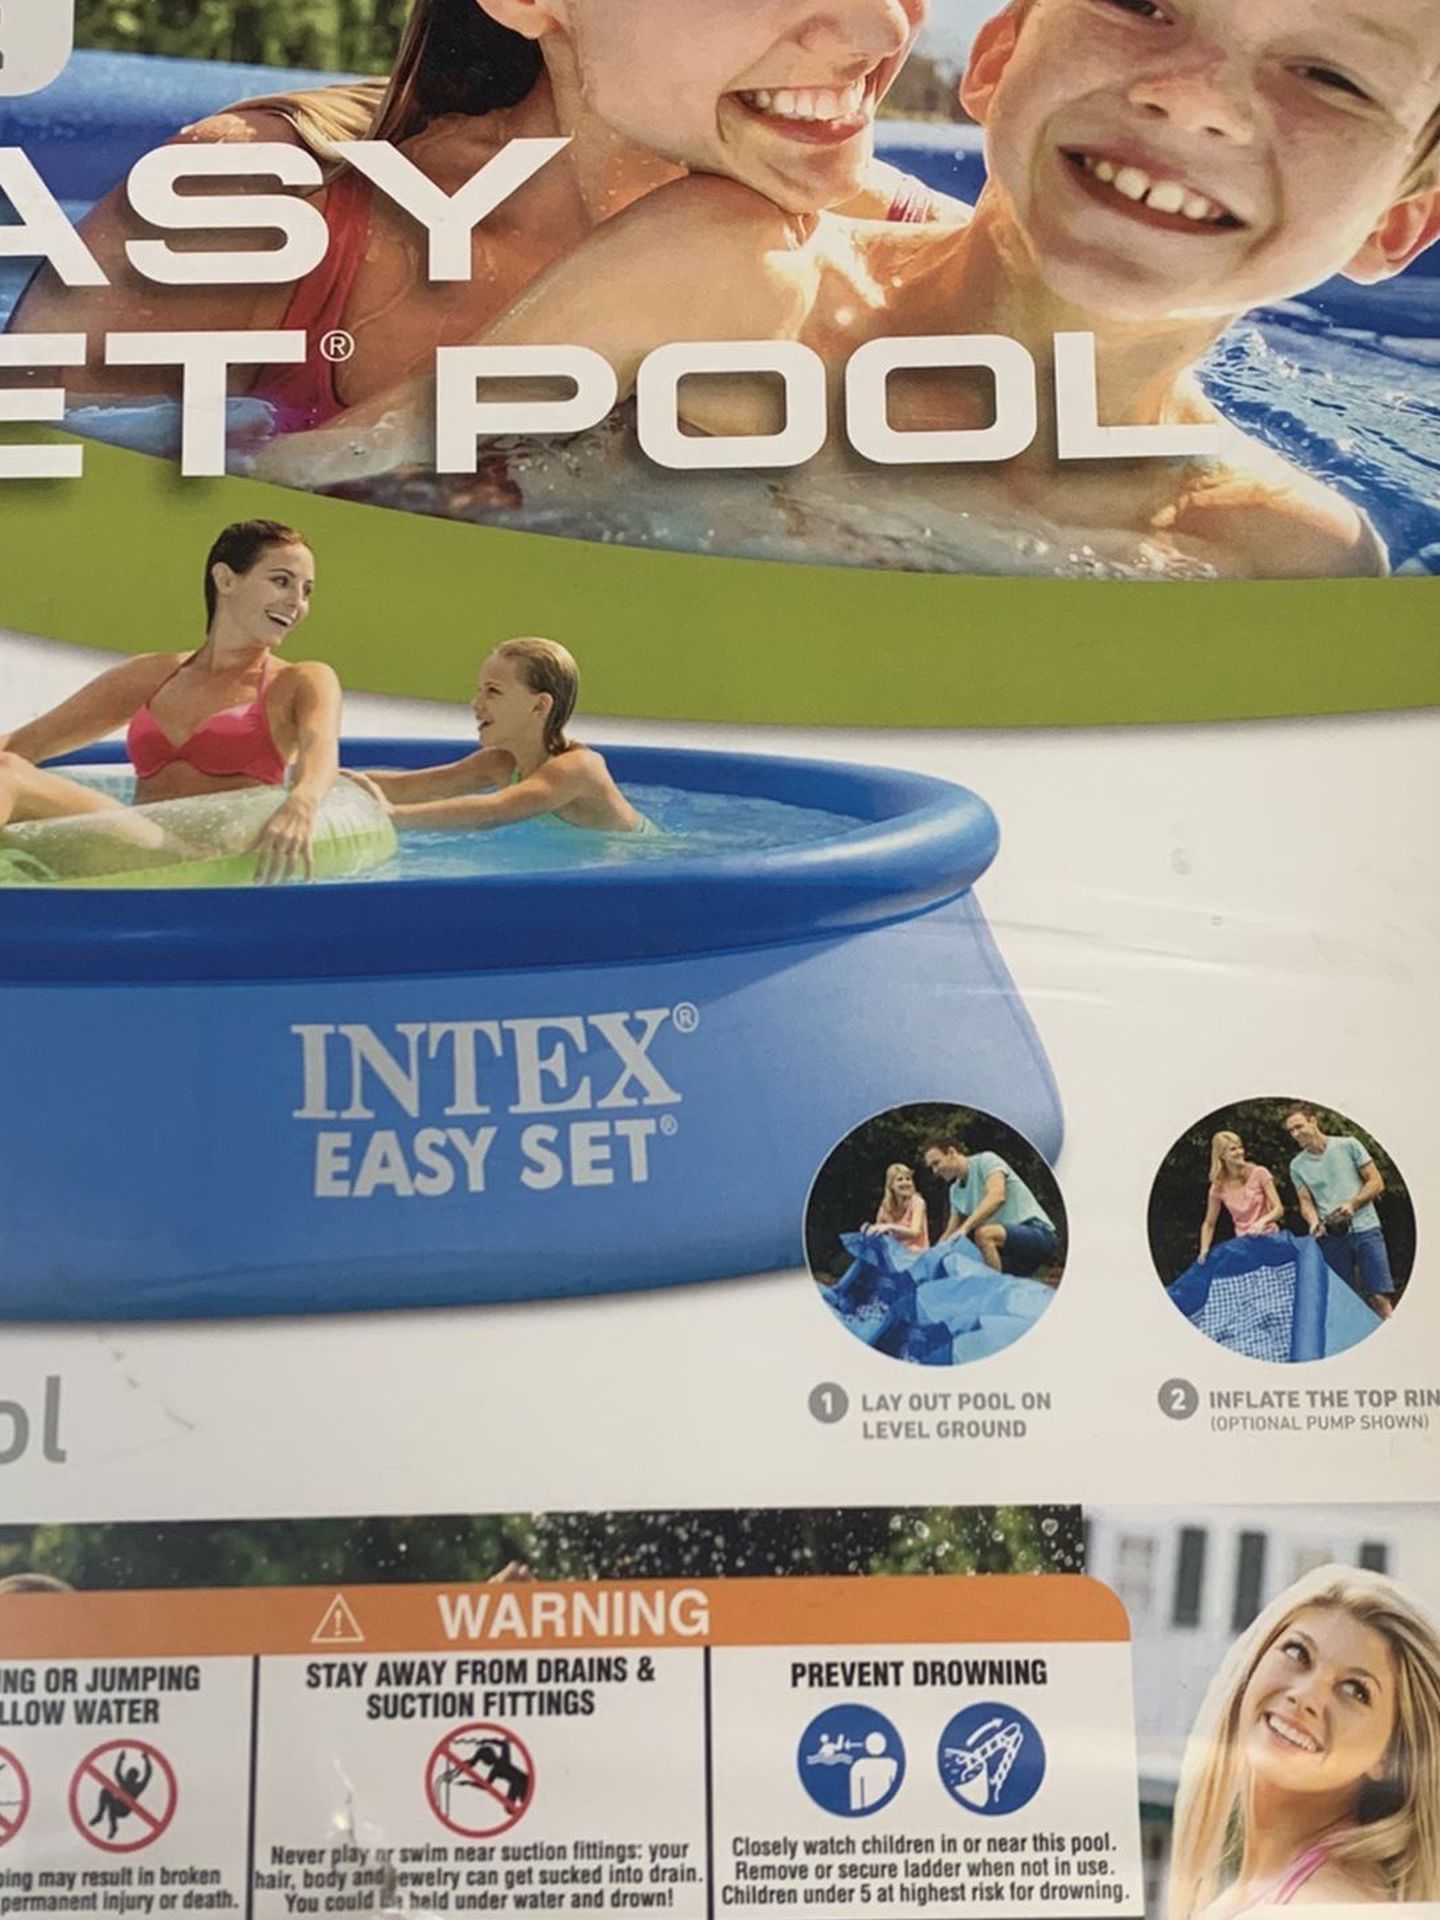 8ft pool for summer